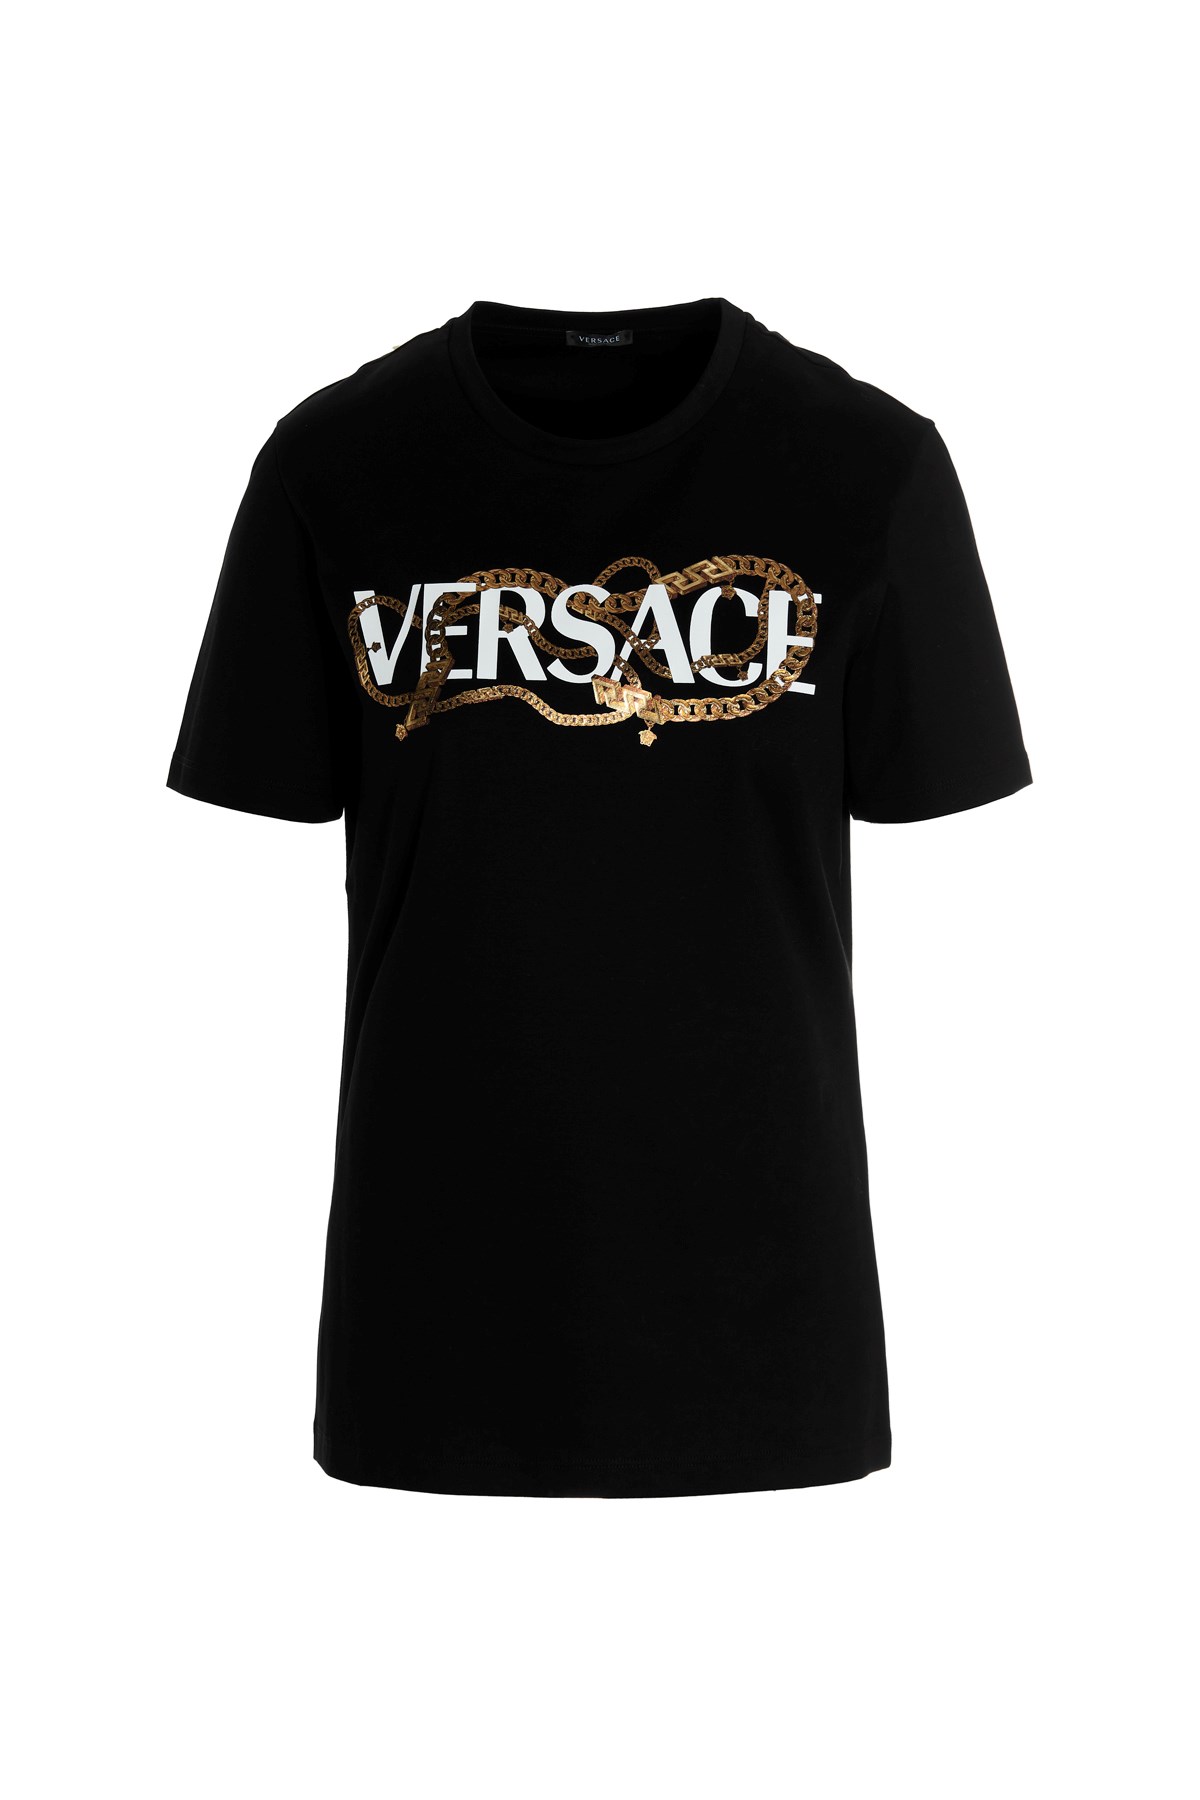 VERSACE Logo Printed T-Shirt